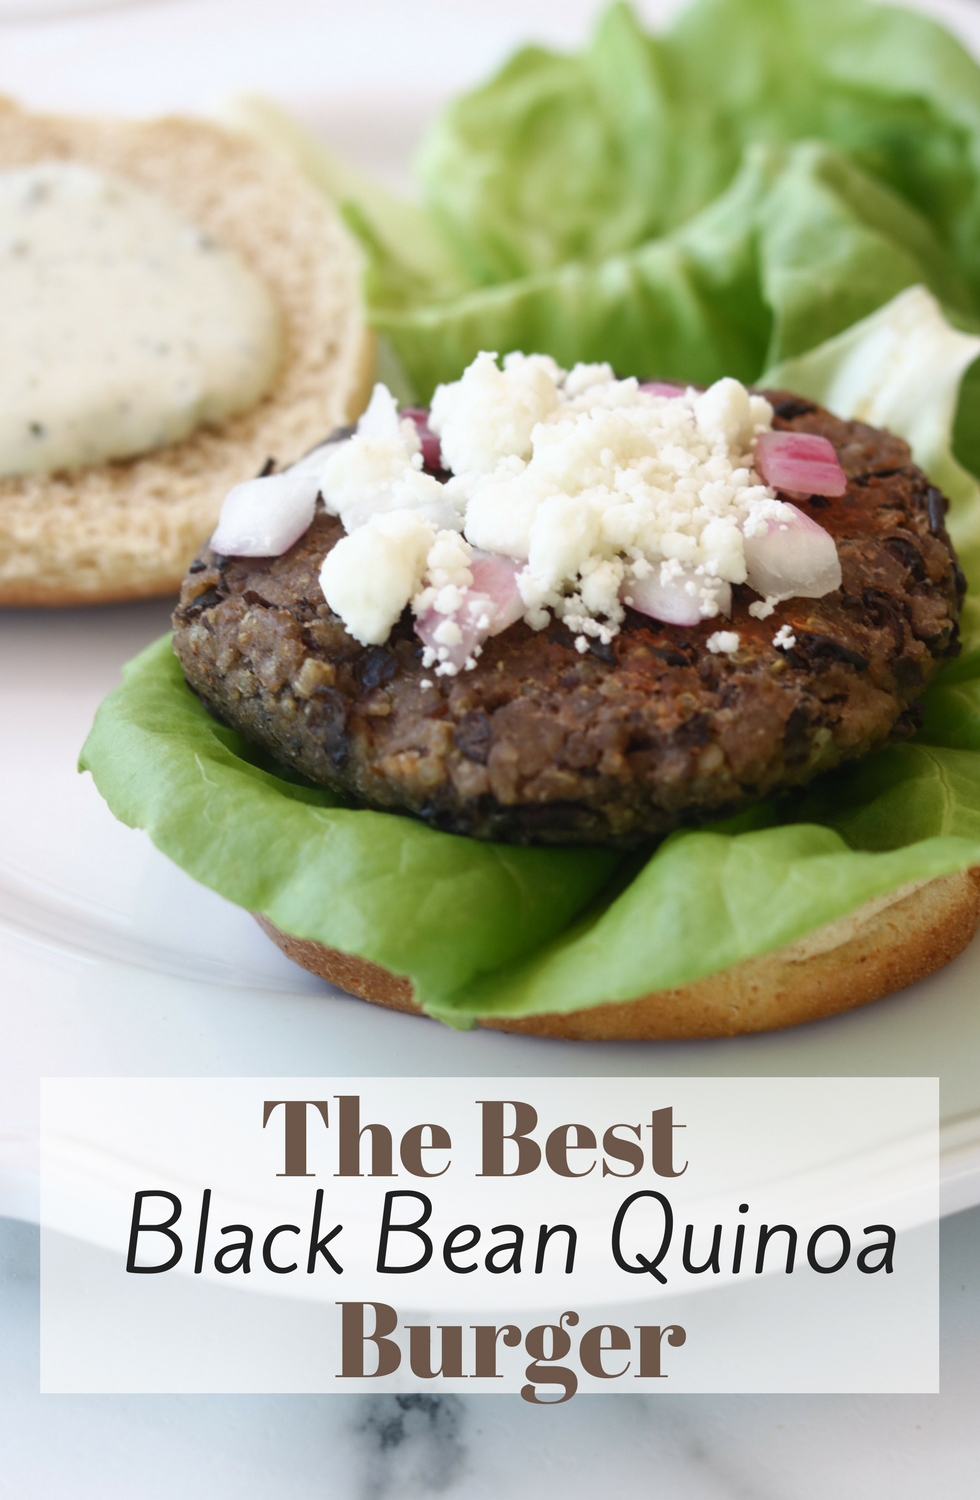 The Best Black Bean Quinoa Burger